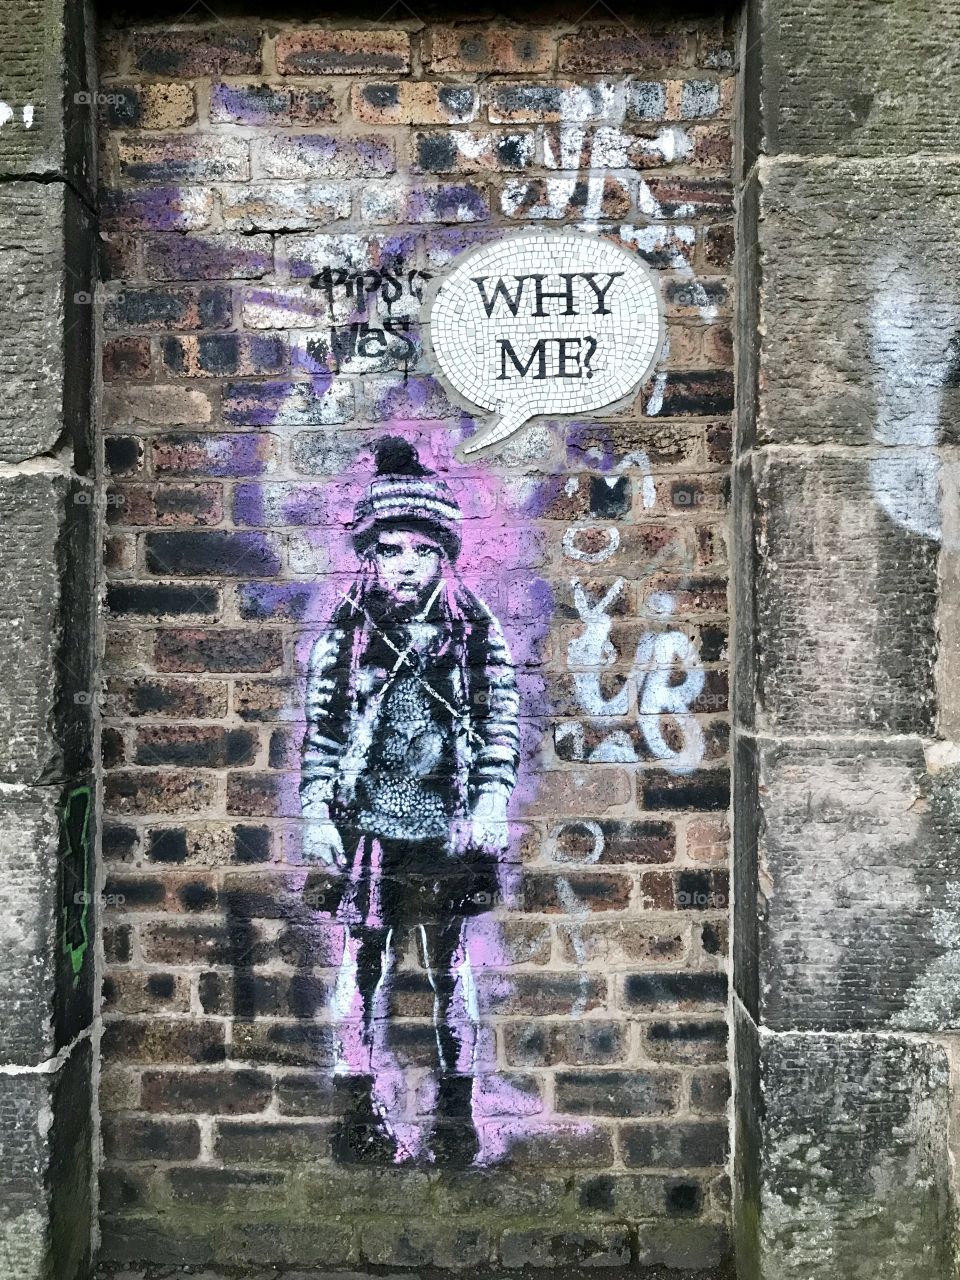 Fantastic street art in Edinburgh, Scotland